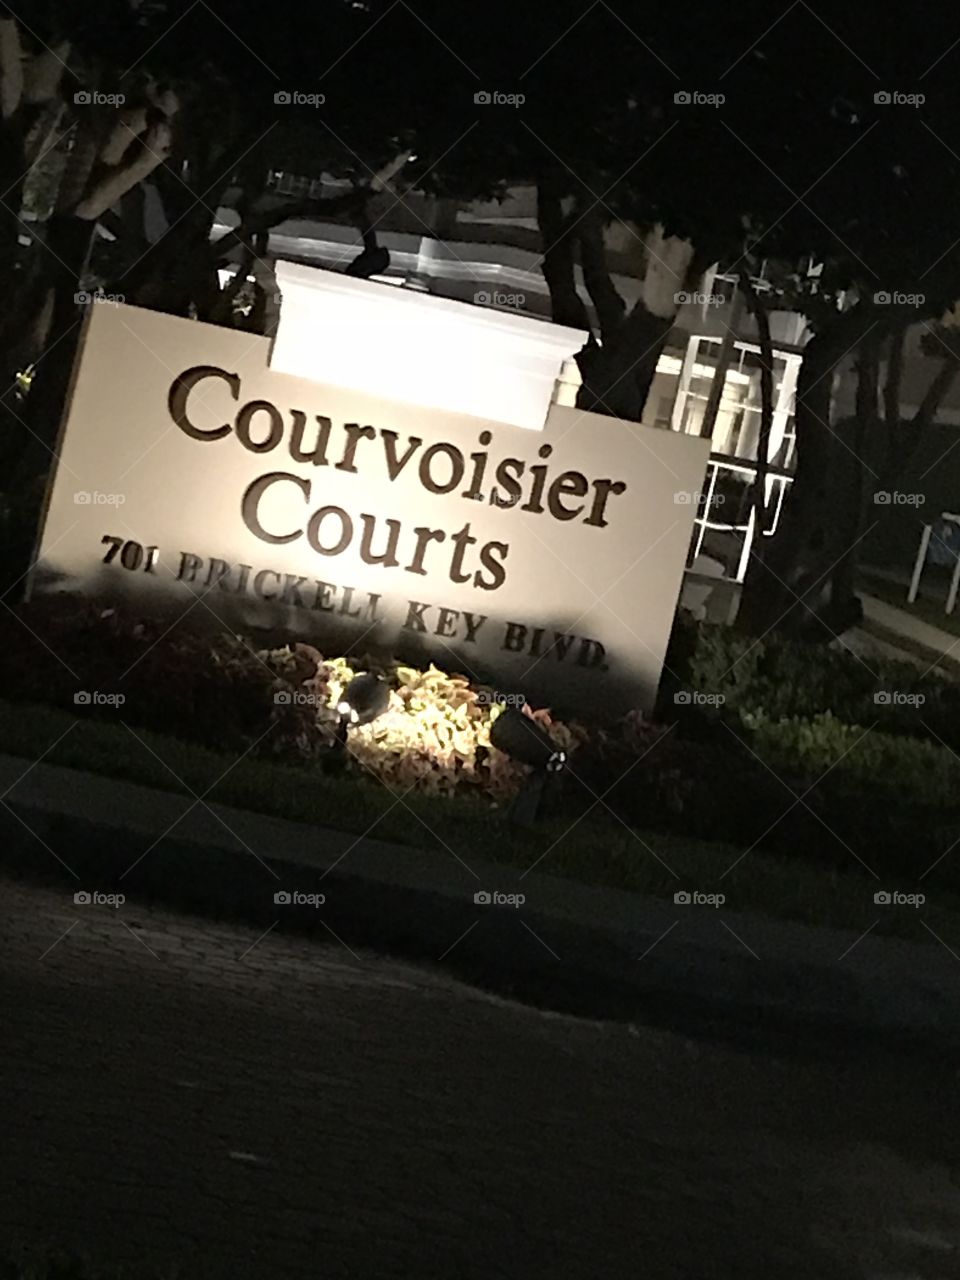 Courvoisier courts